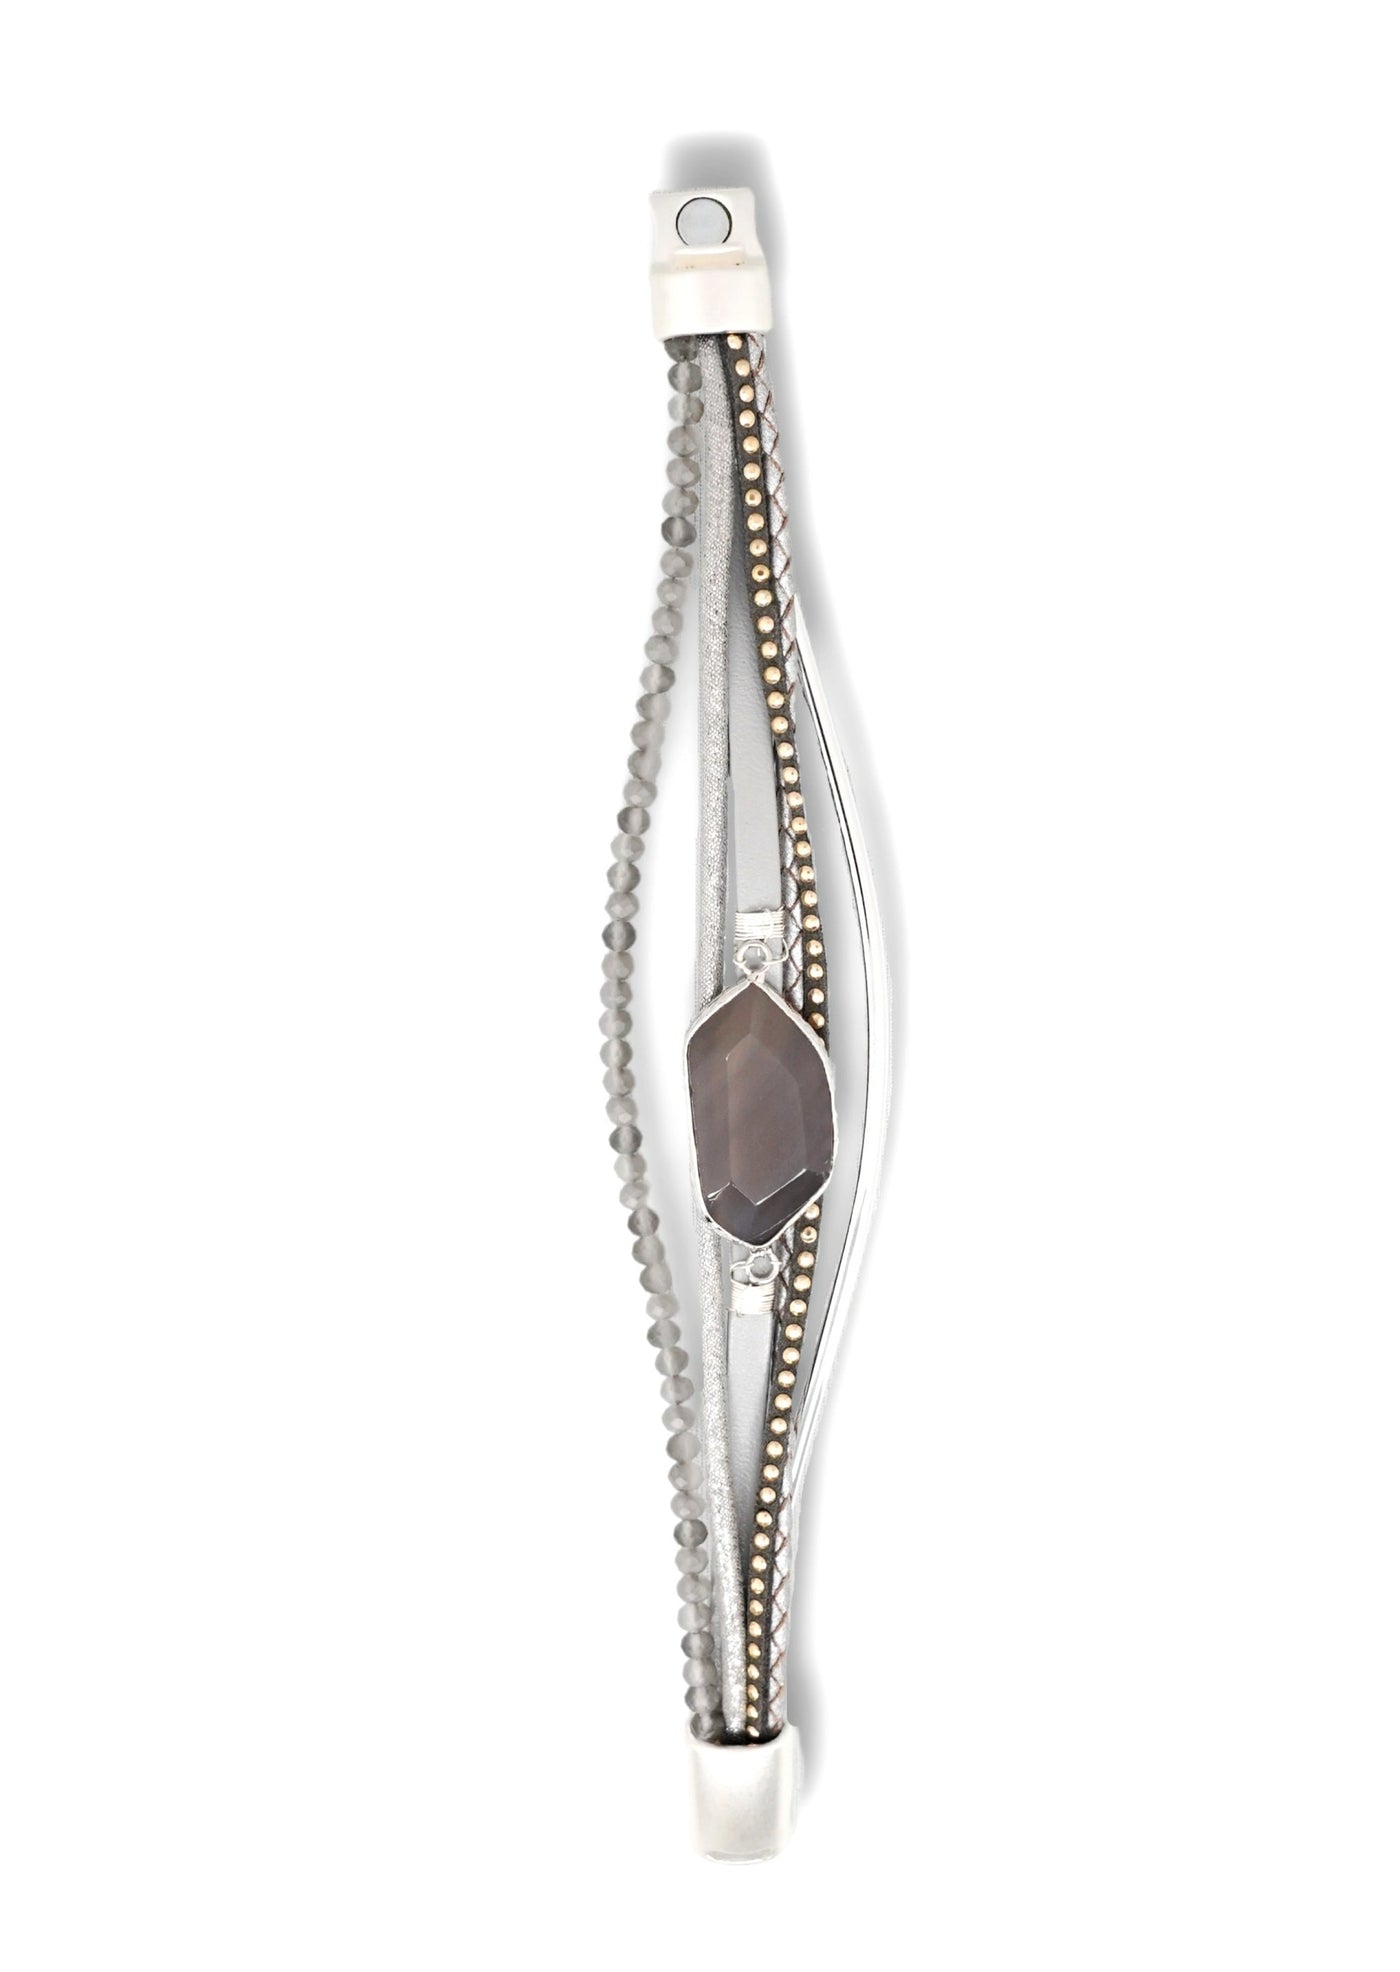 Merx - Six Strand Crystal Bracelet